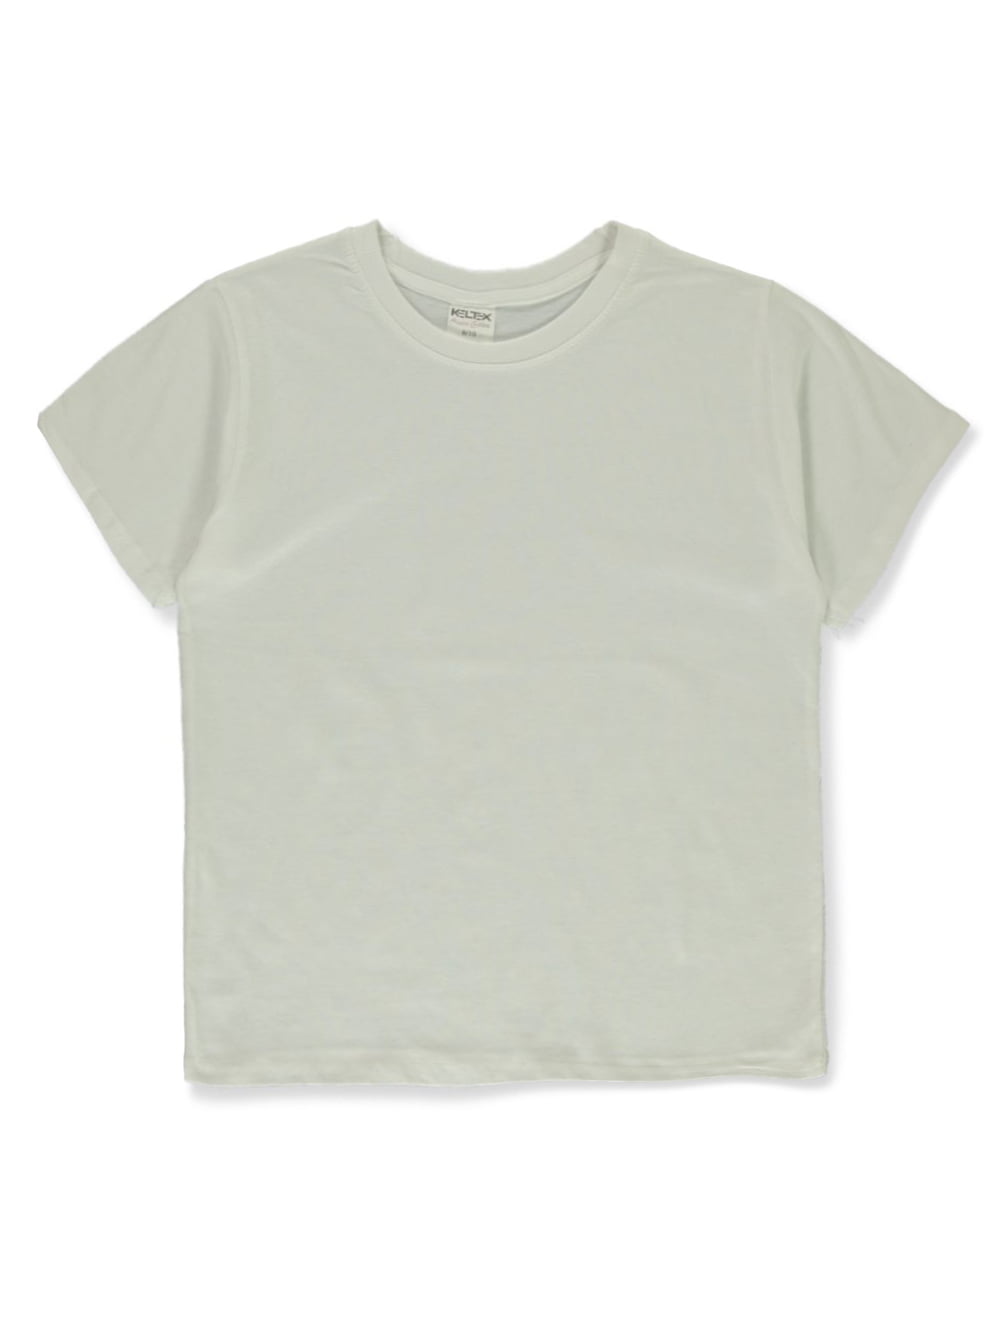 Keltex Boys' Crew Neck T-Shirt - white, 8 - 10 (Big Boys) - Walmart.com